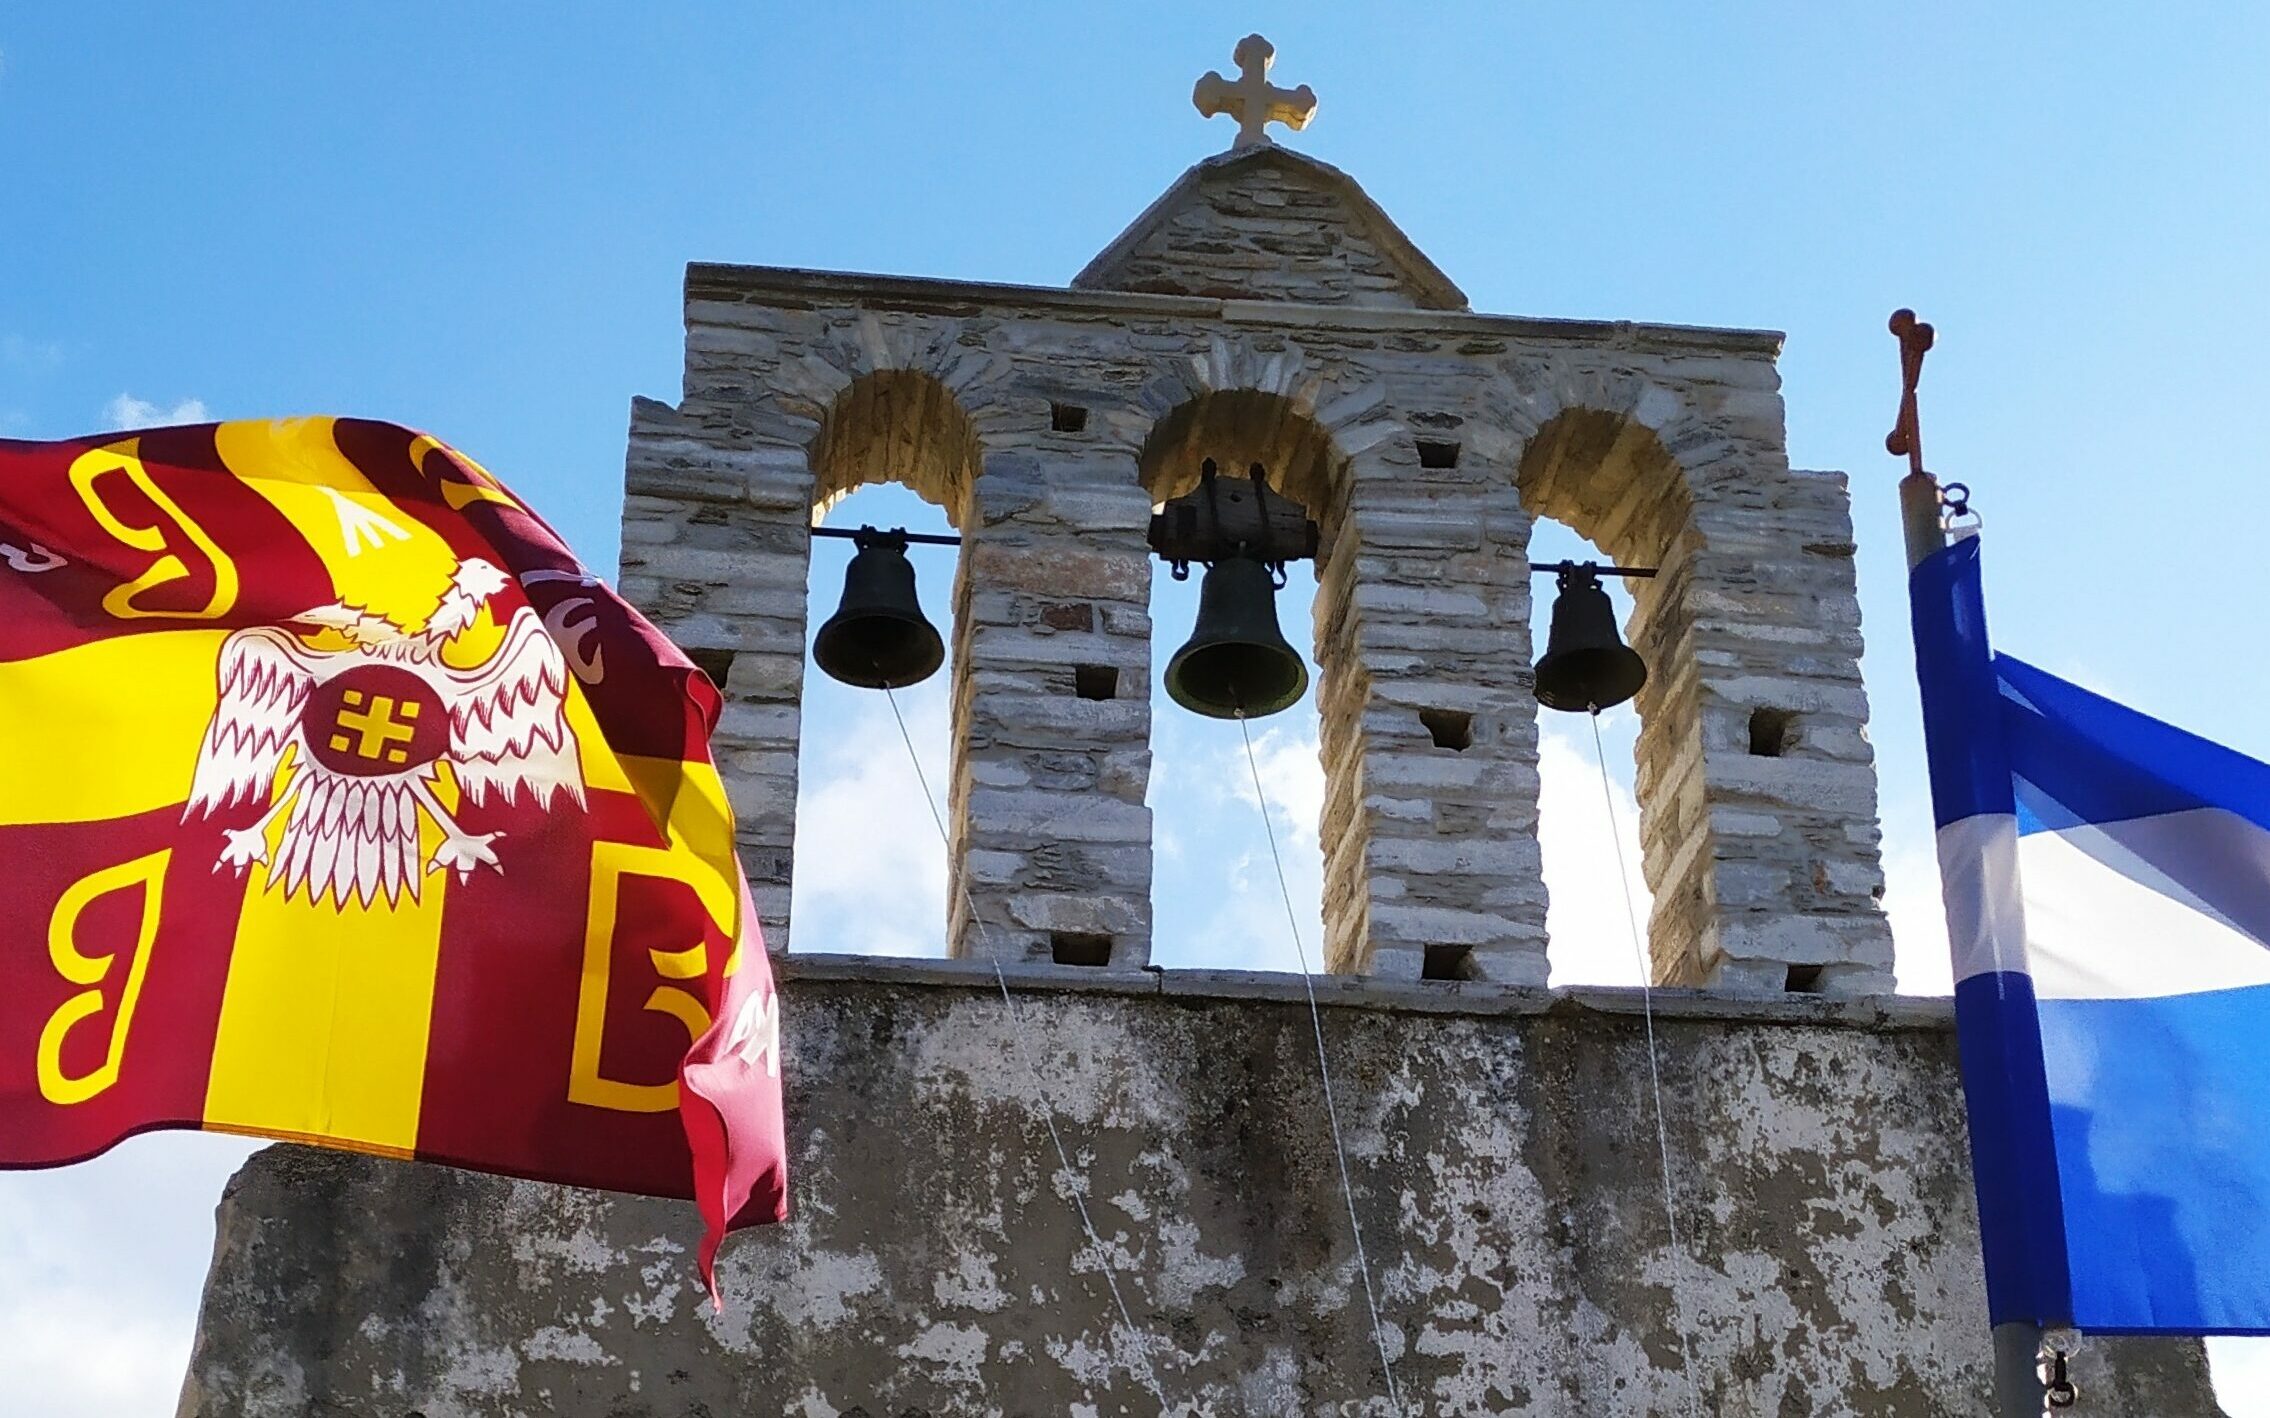 Panagia Drosiani: The most historic church of Naxos